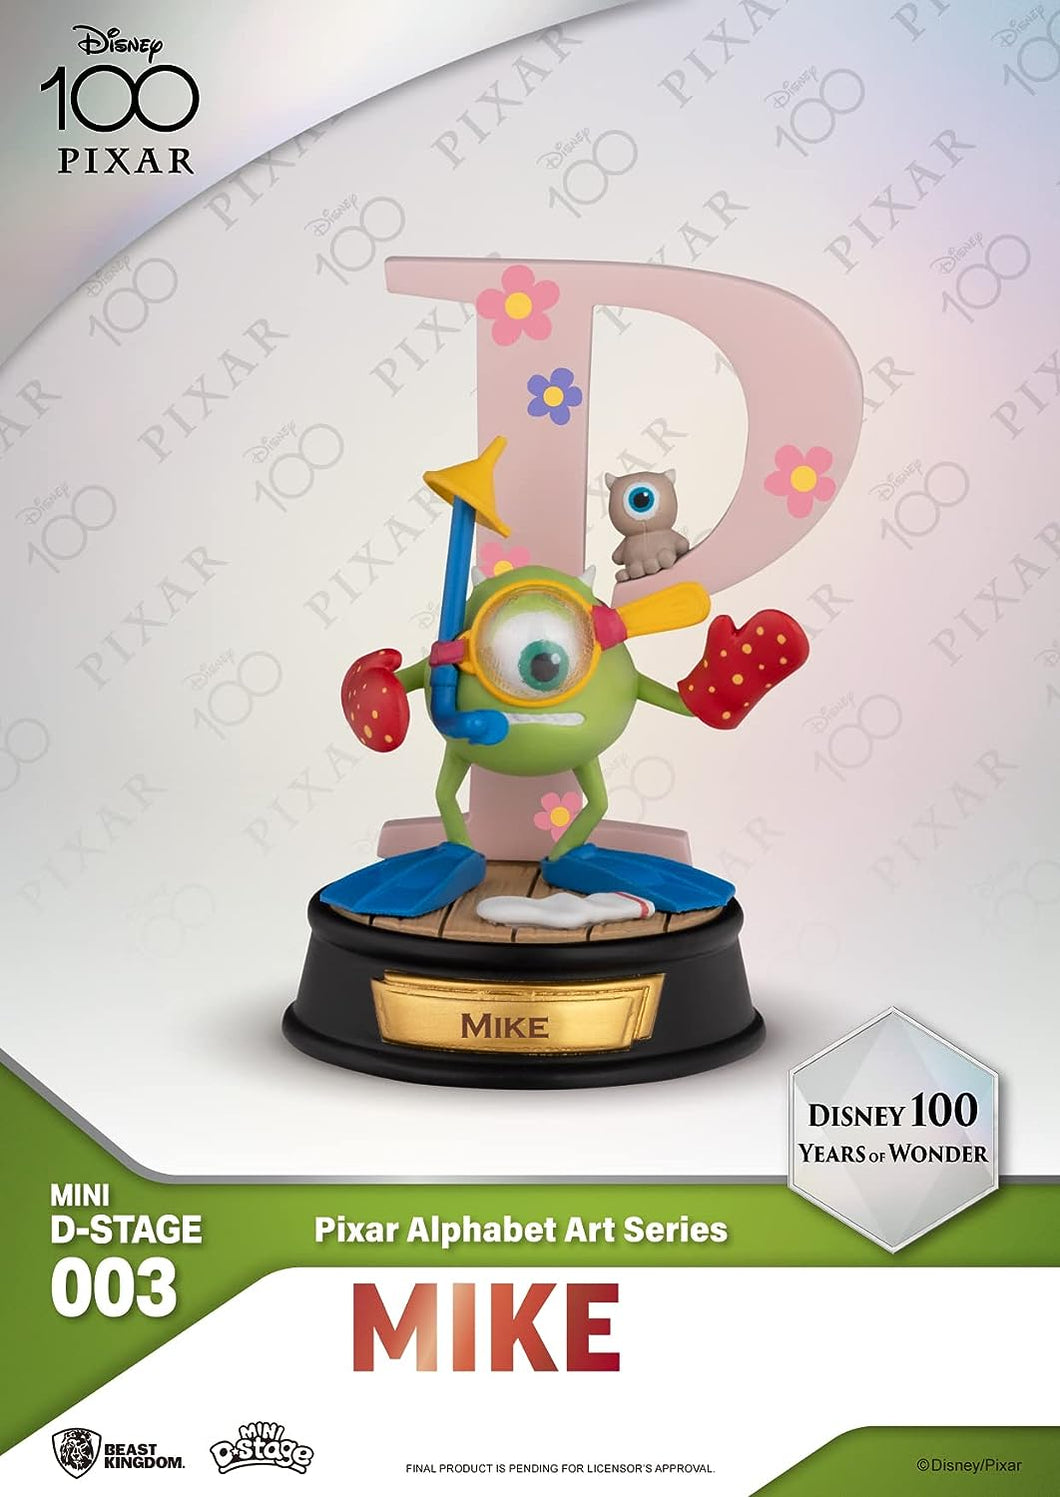 Disney 100 Years of Wonder Mini D-Stage Pixar Alphabet Art (Indvidual - P - Mike)